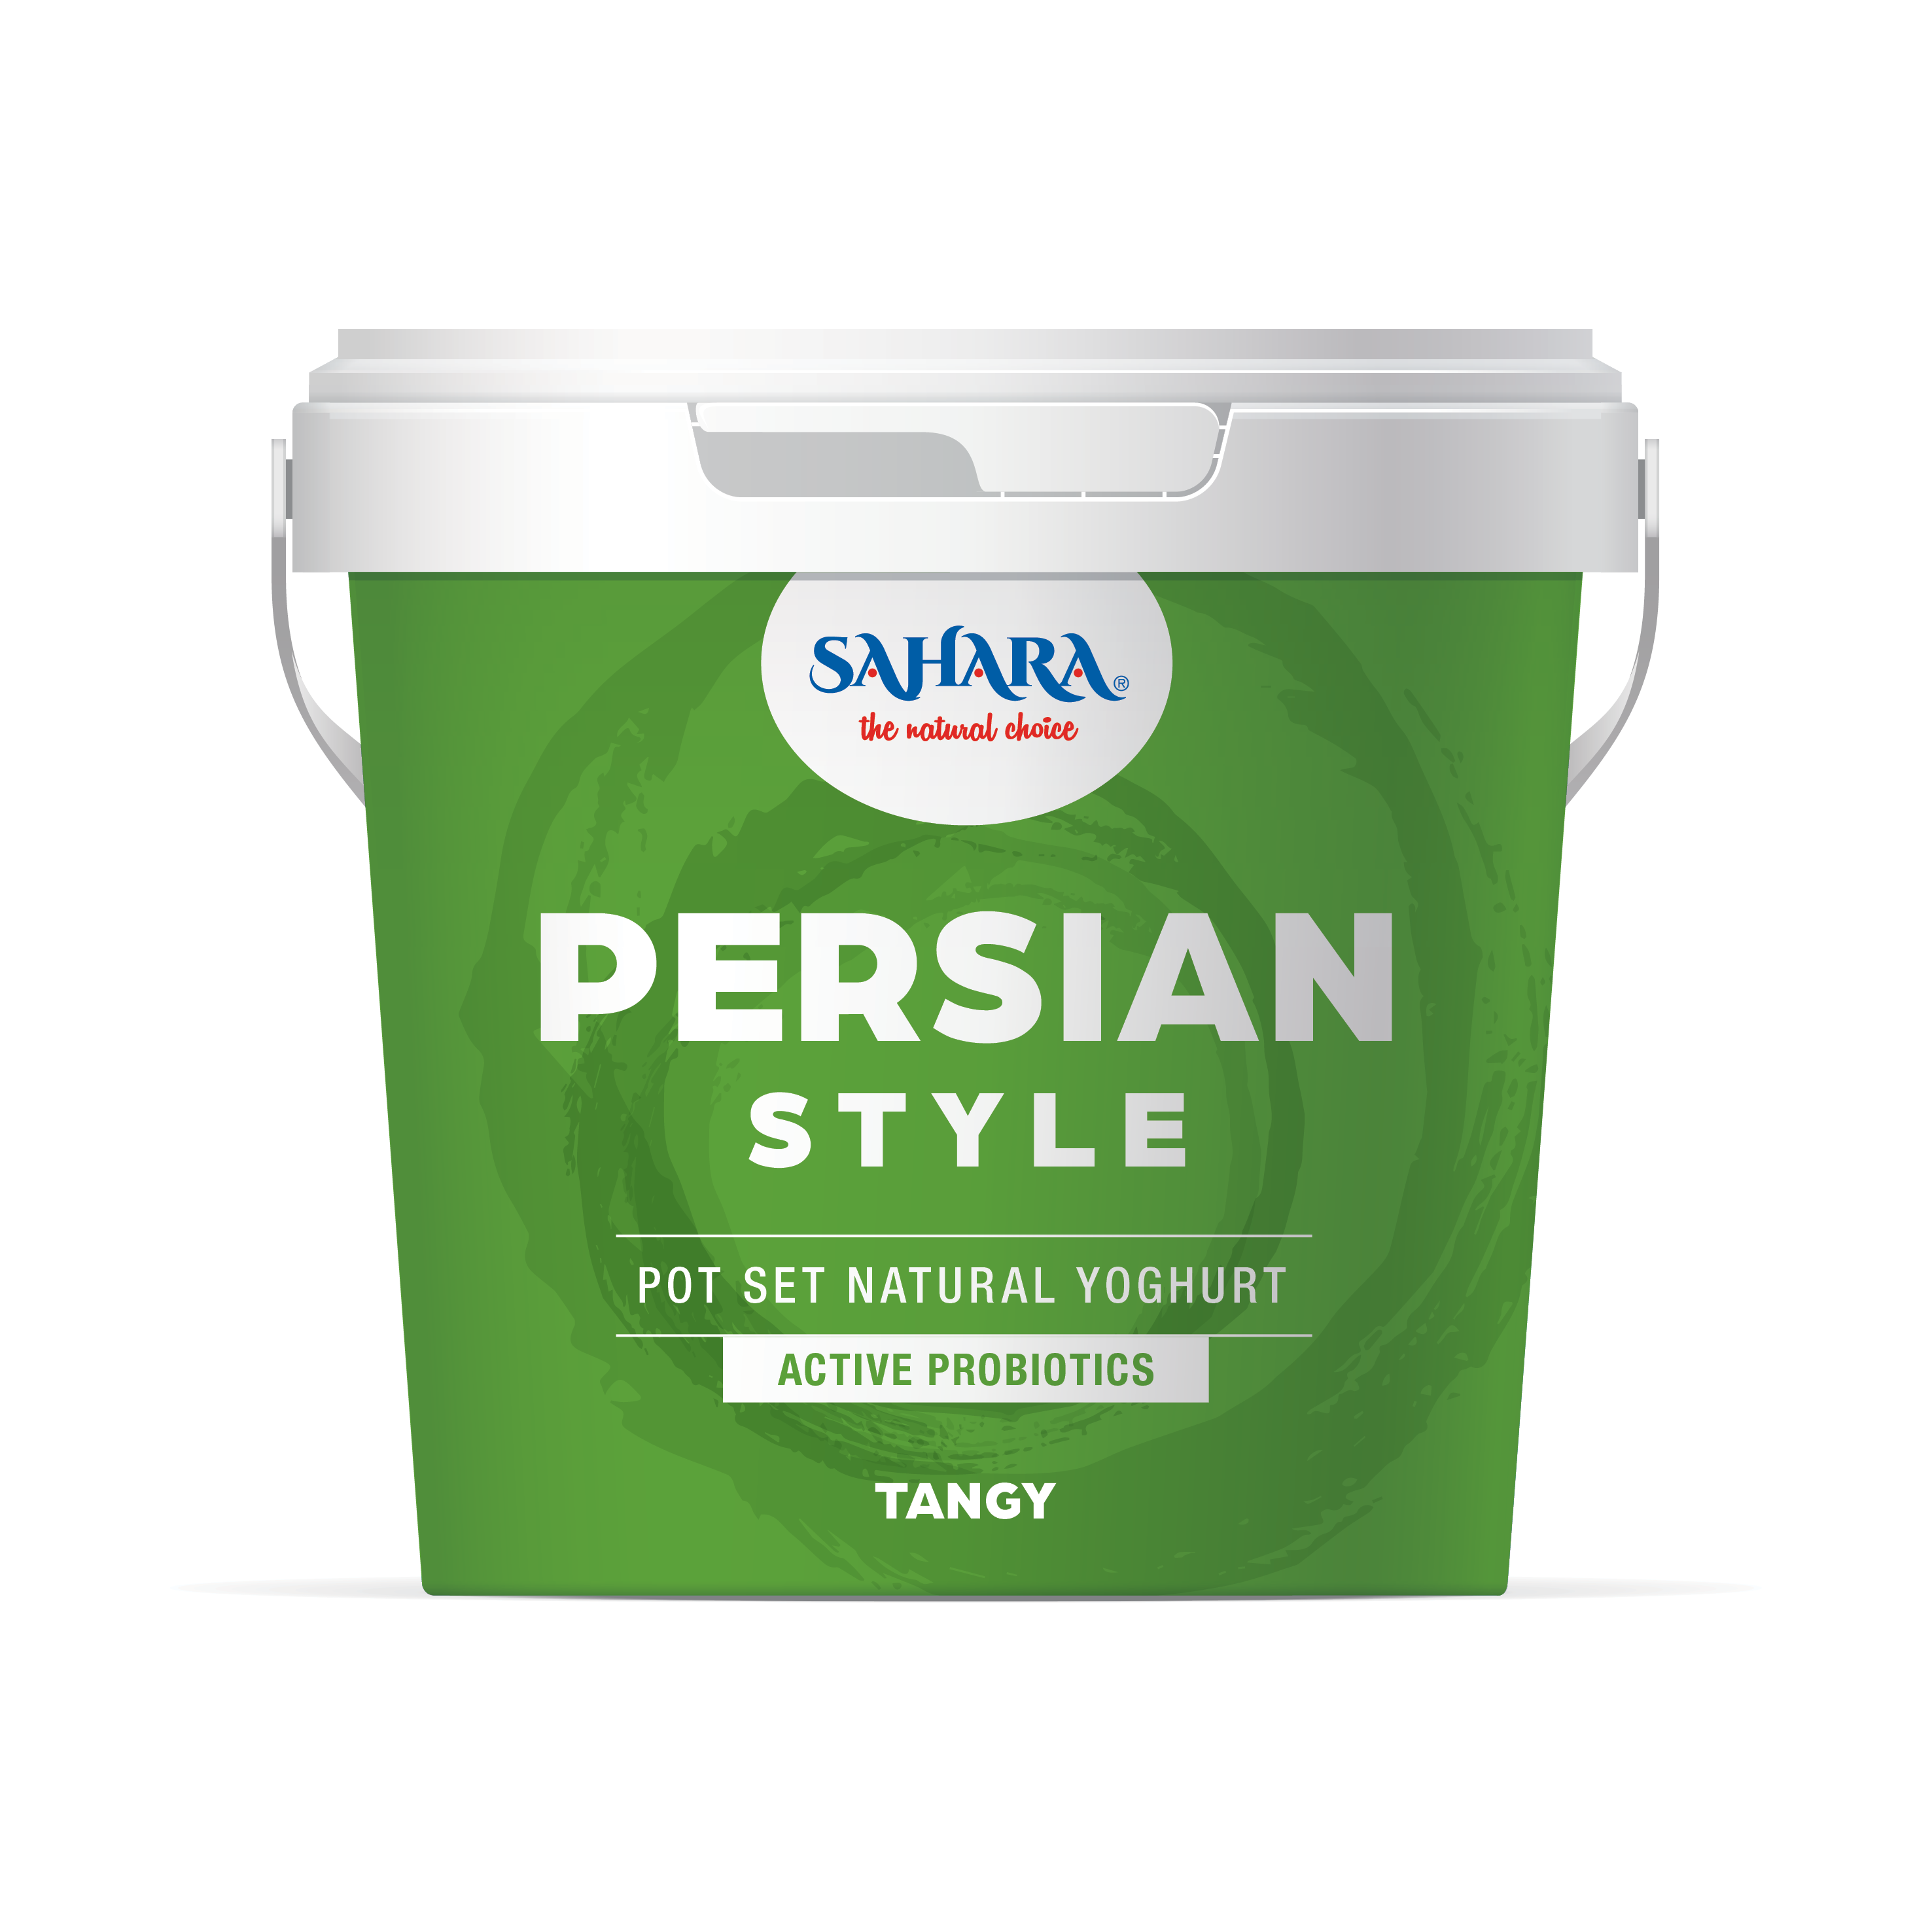 Sahara persian style yoghurt